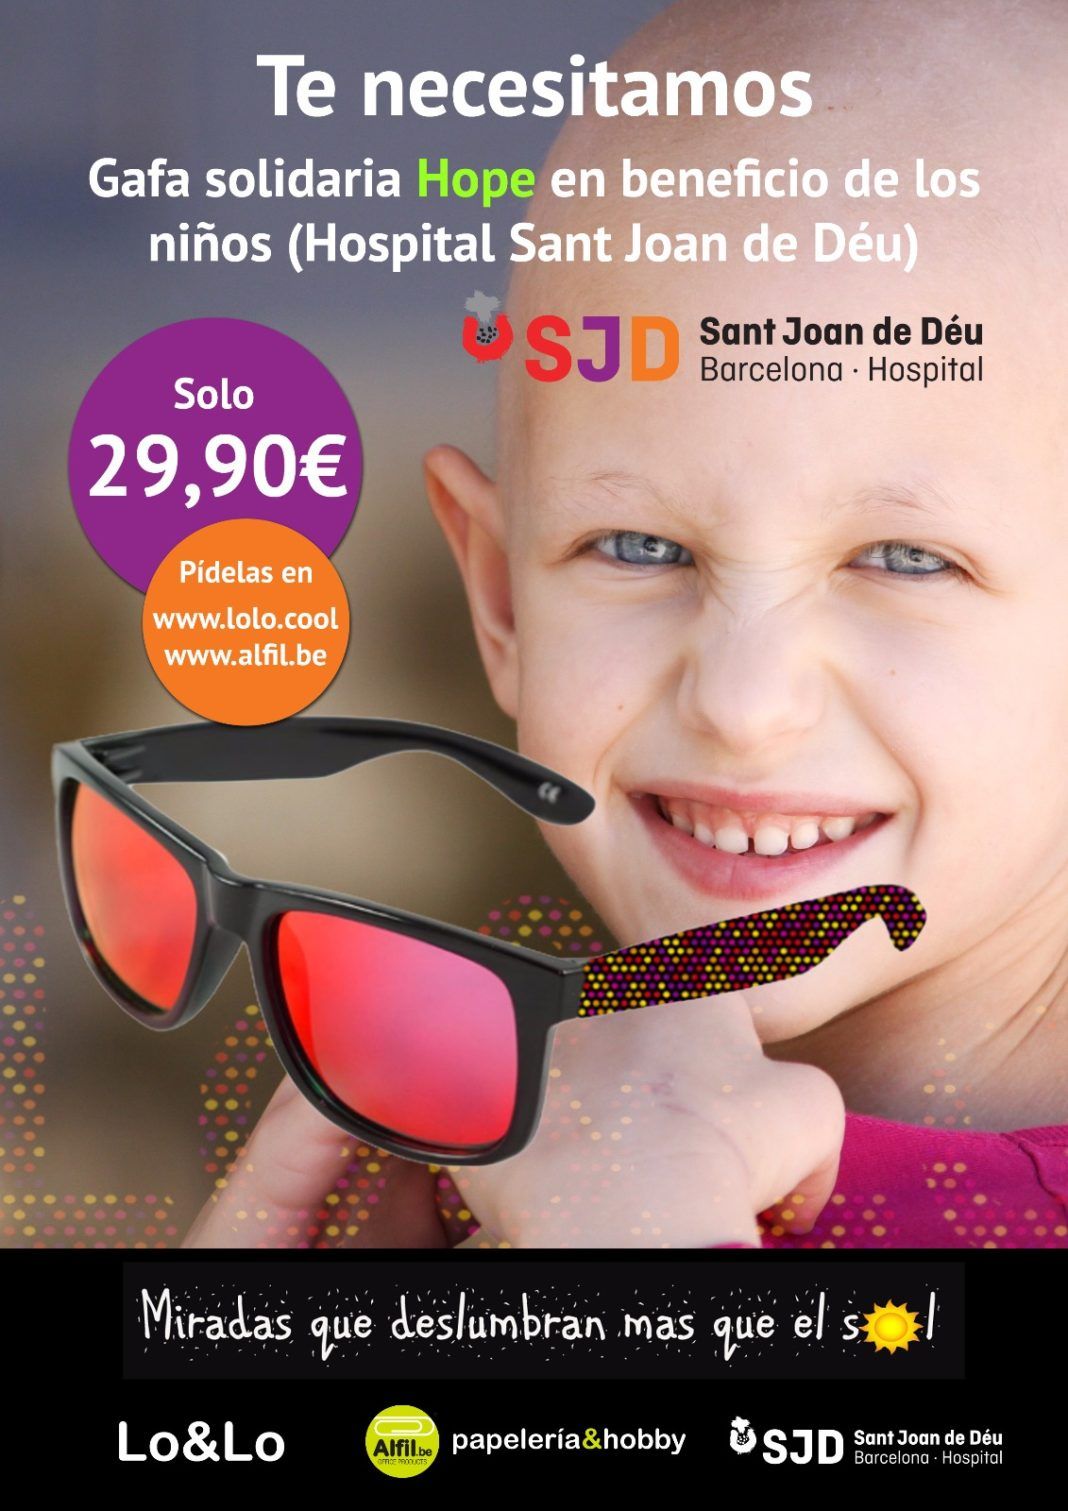 Campaña solidaria de Alfil Be junto con el hospital de Sant Joan de Déu.